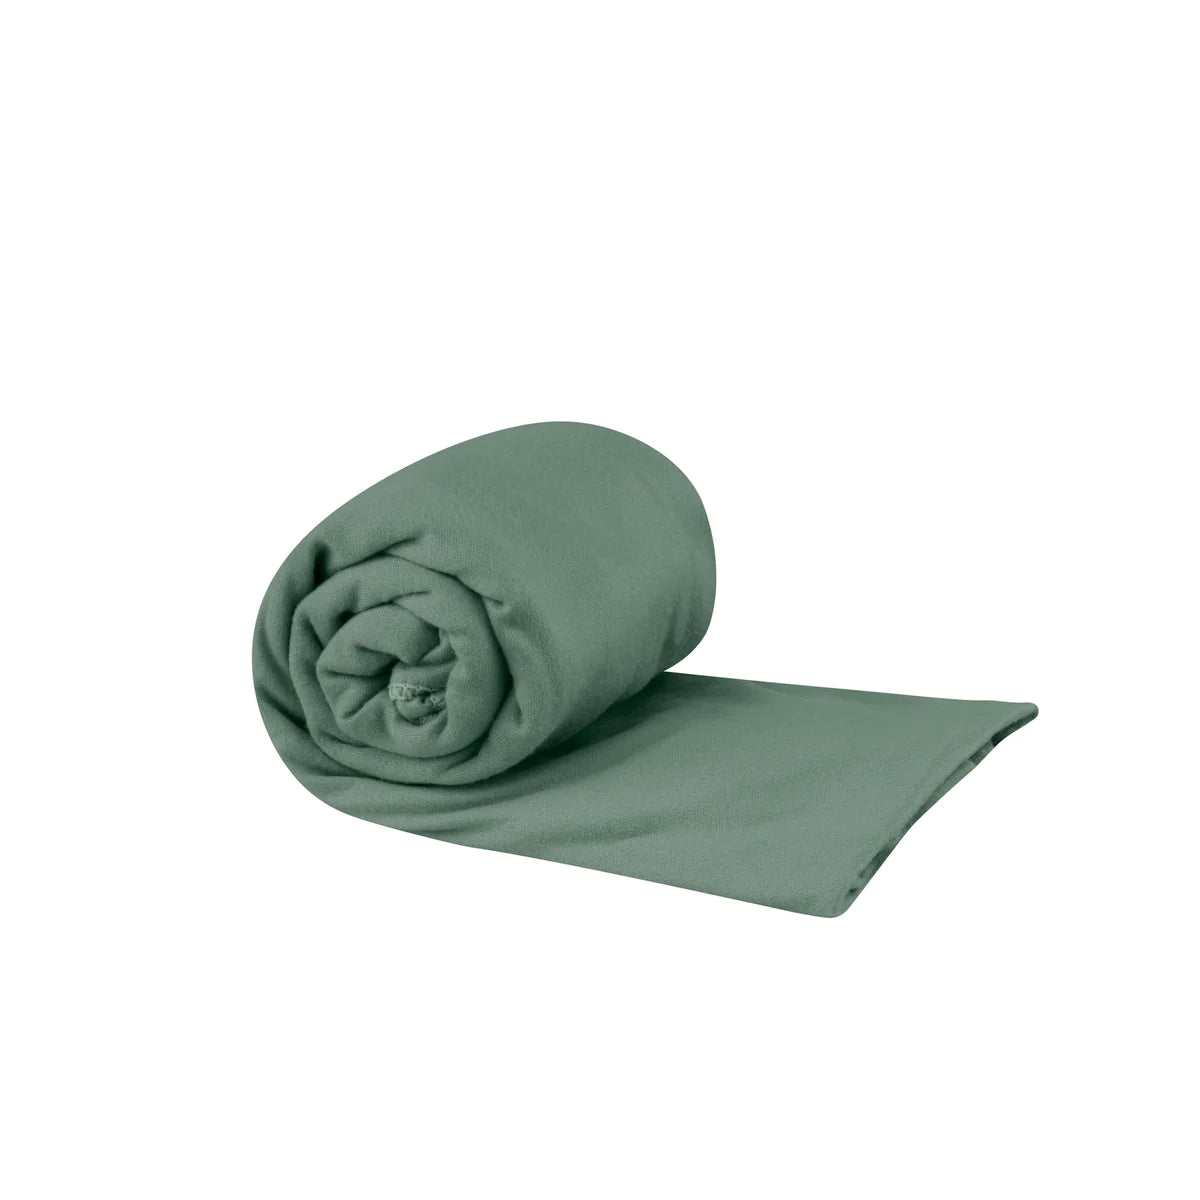 Sea to Summit - Pocket Towel Medium - Sage Green-1